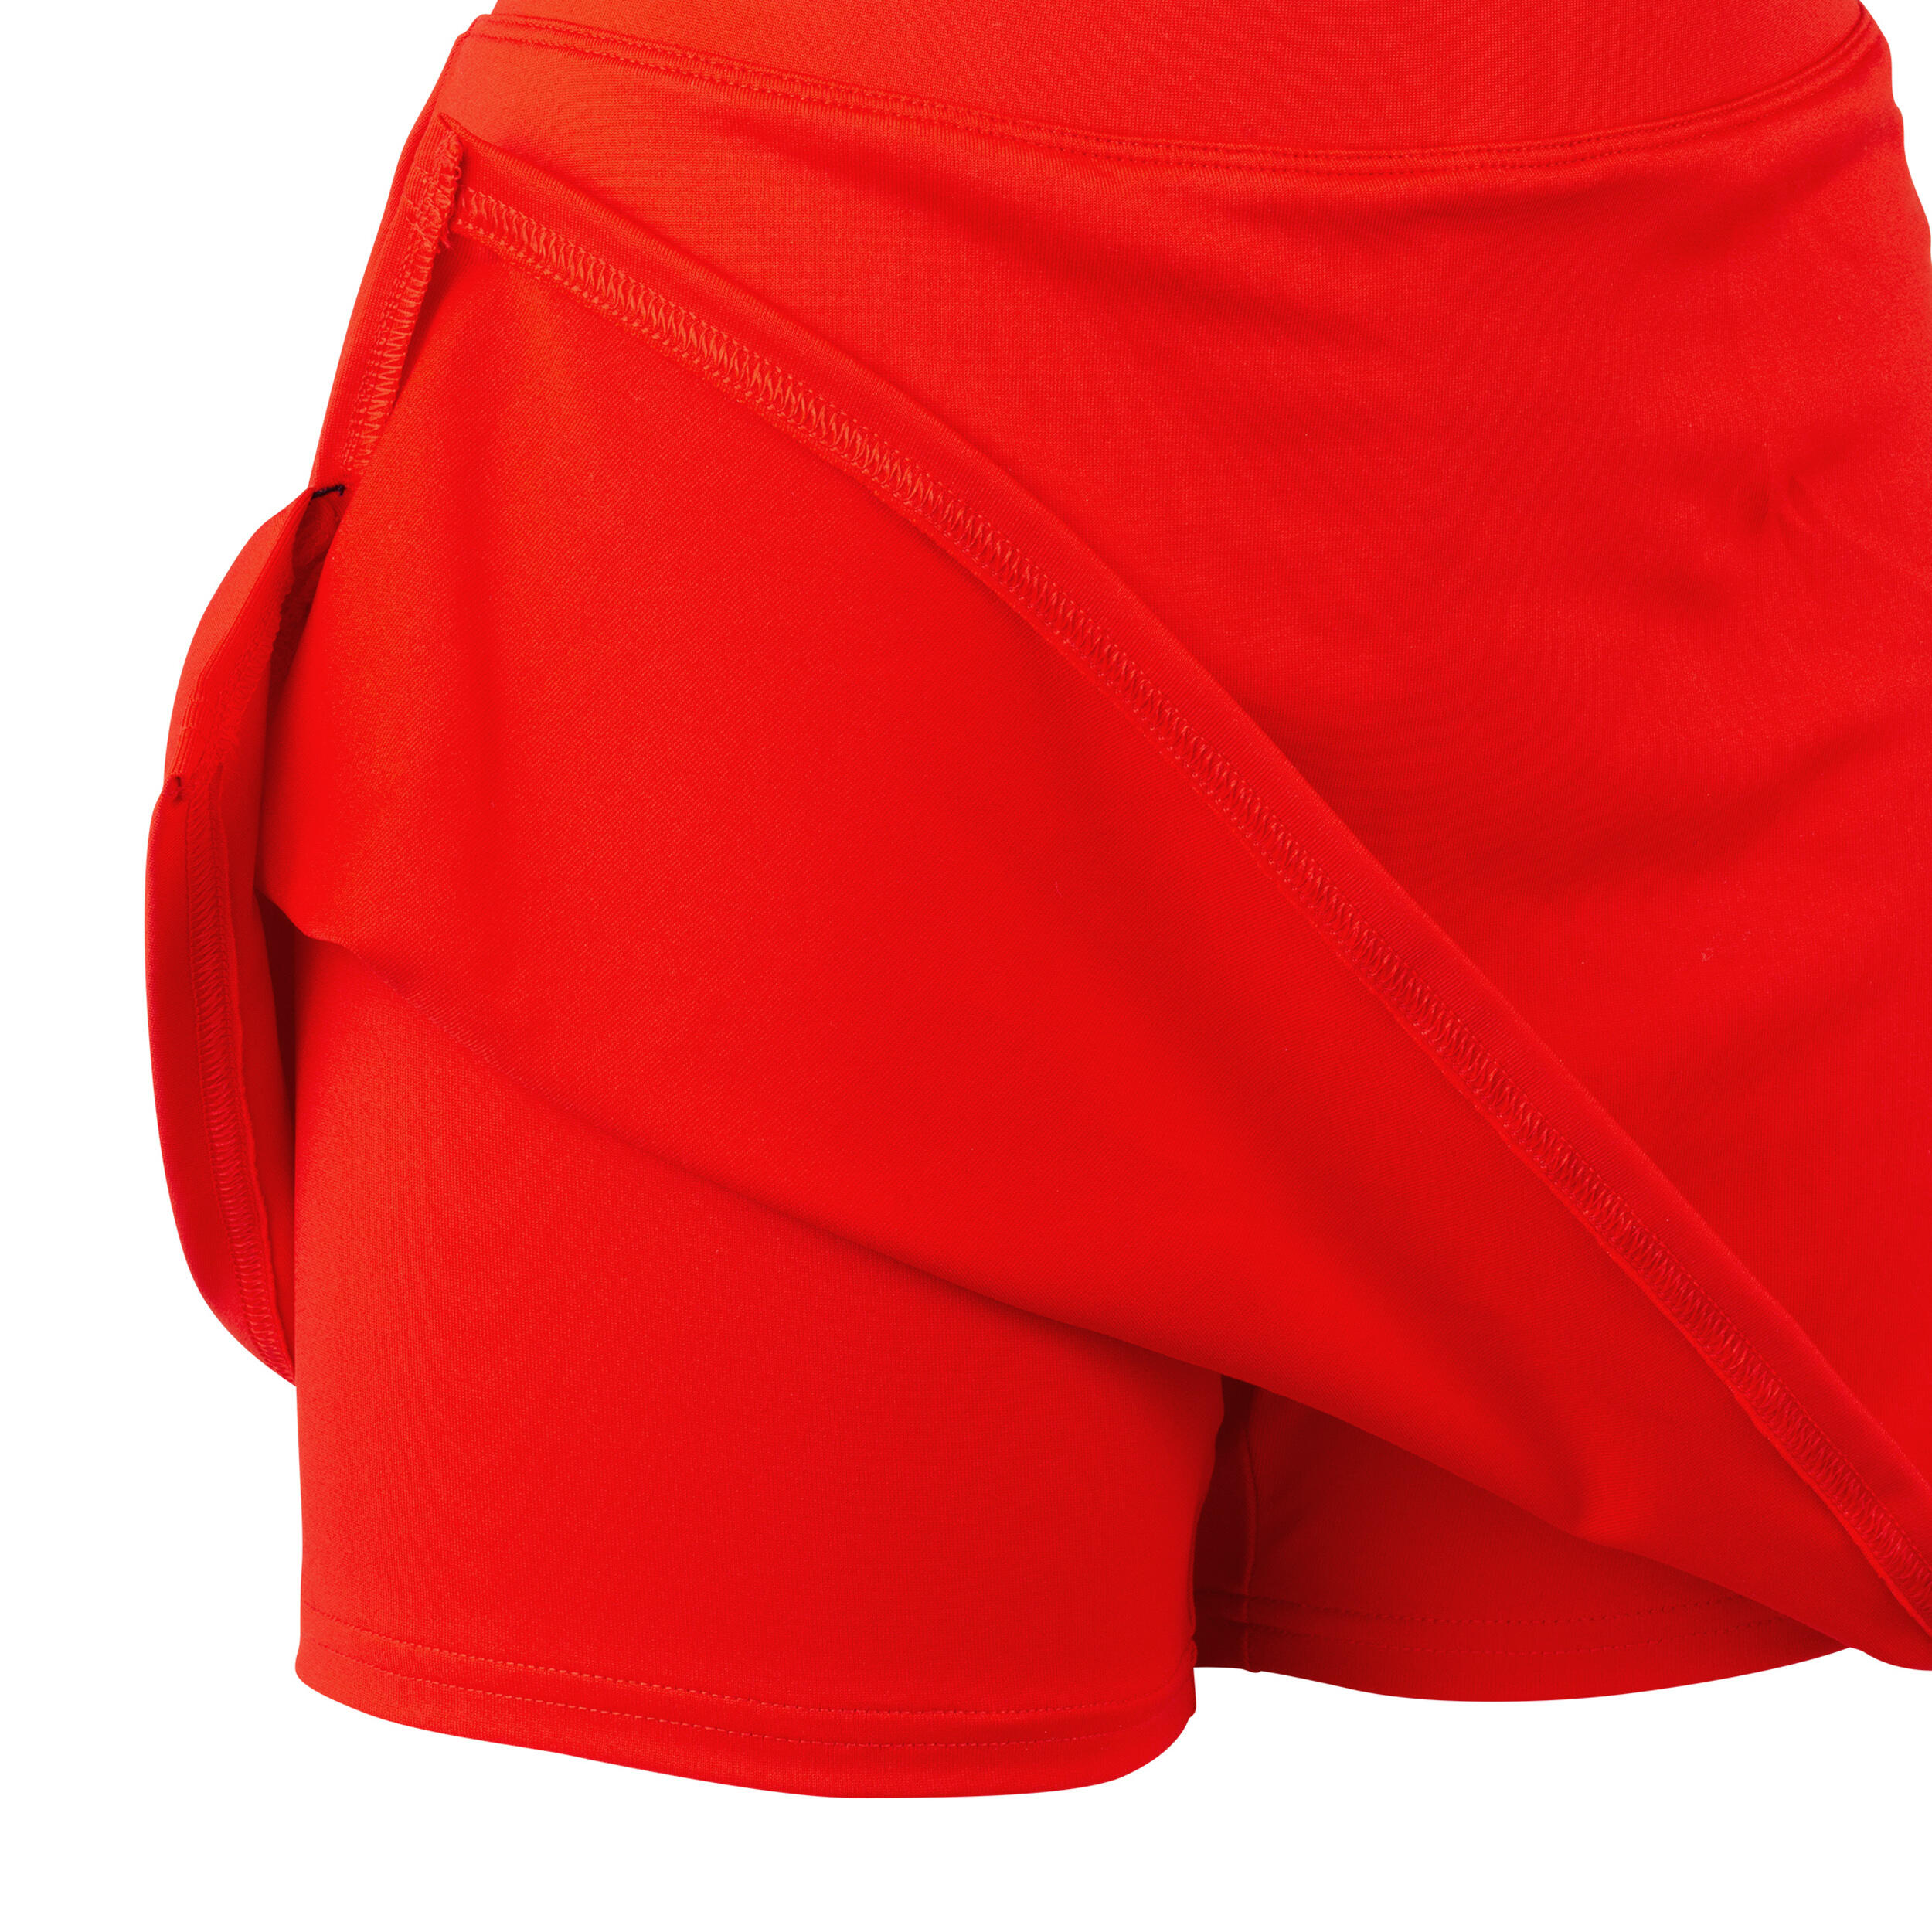 Women's Field Hockey Skirt FH500 - Red 2/4